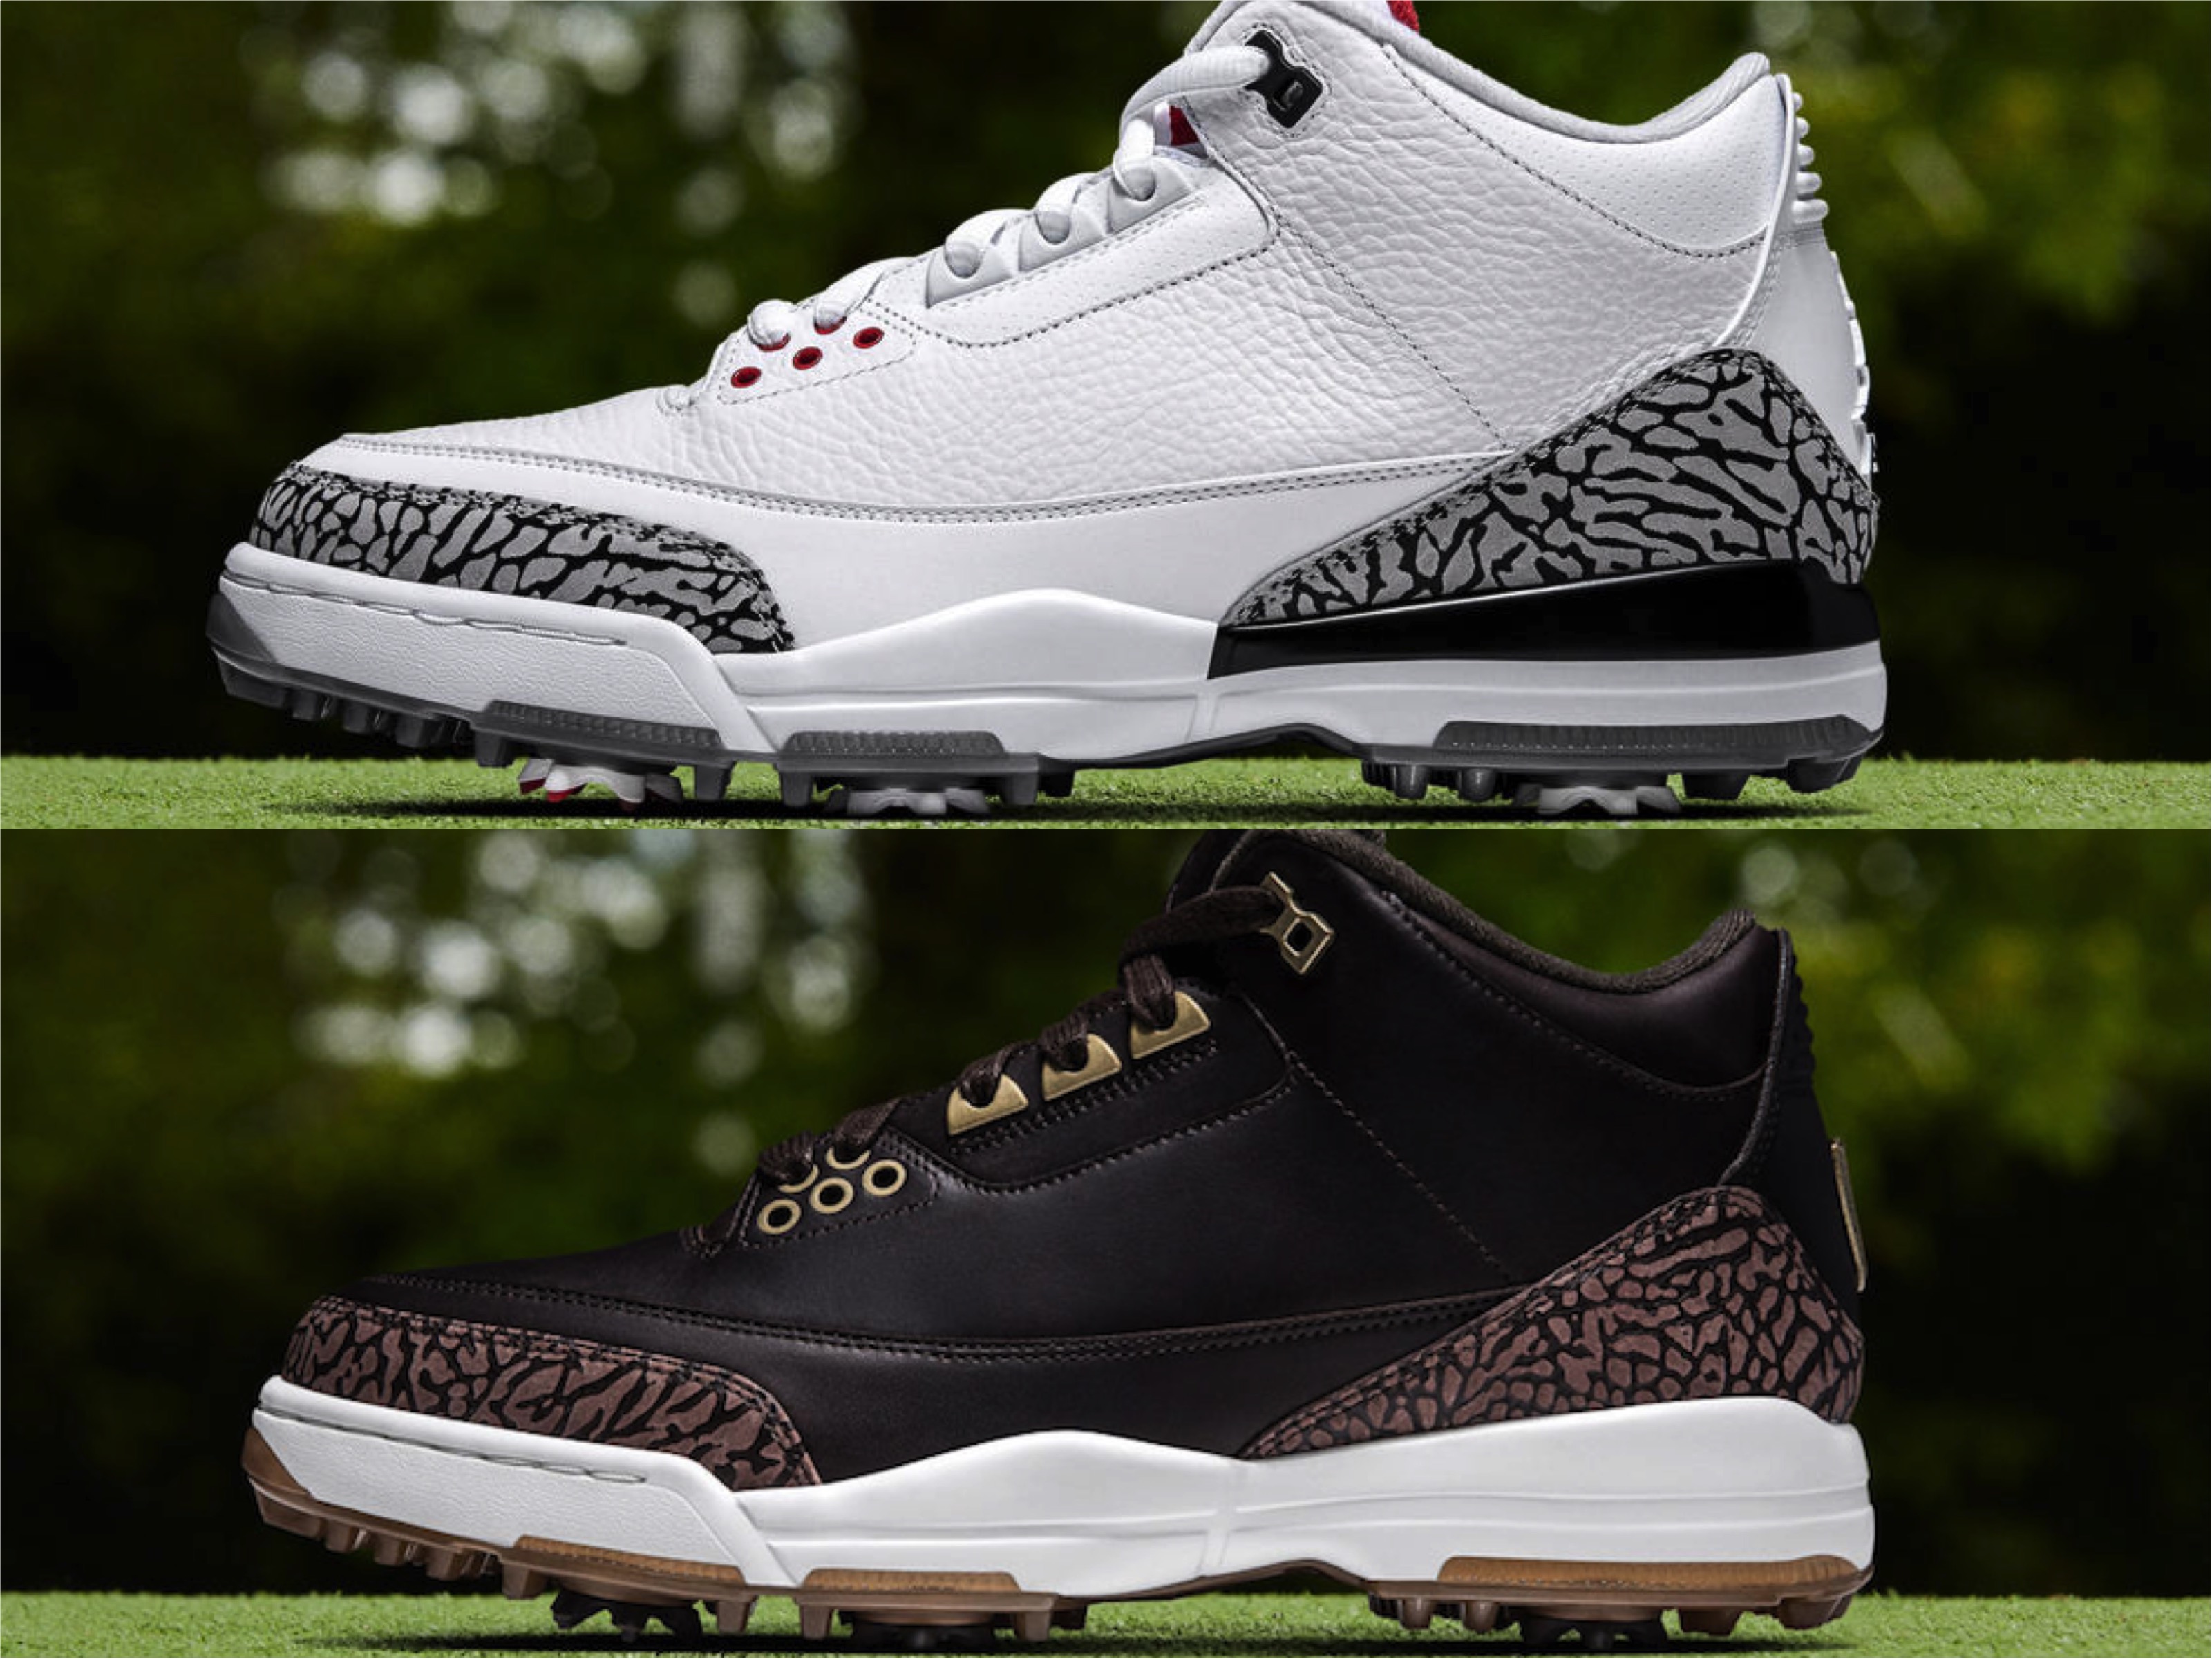 Nike to release Air Jordan III golf shoes on Feb. 16 – GolfWRX